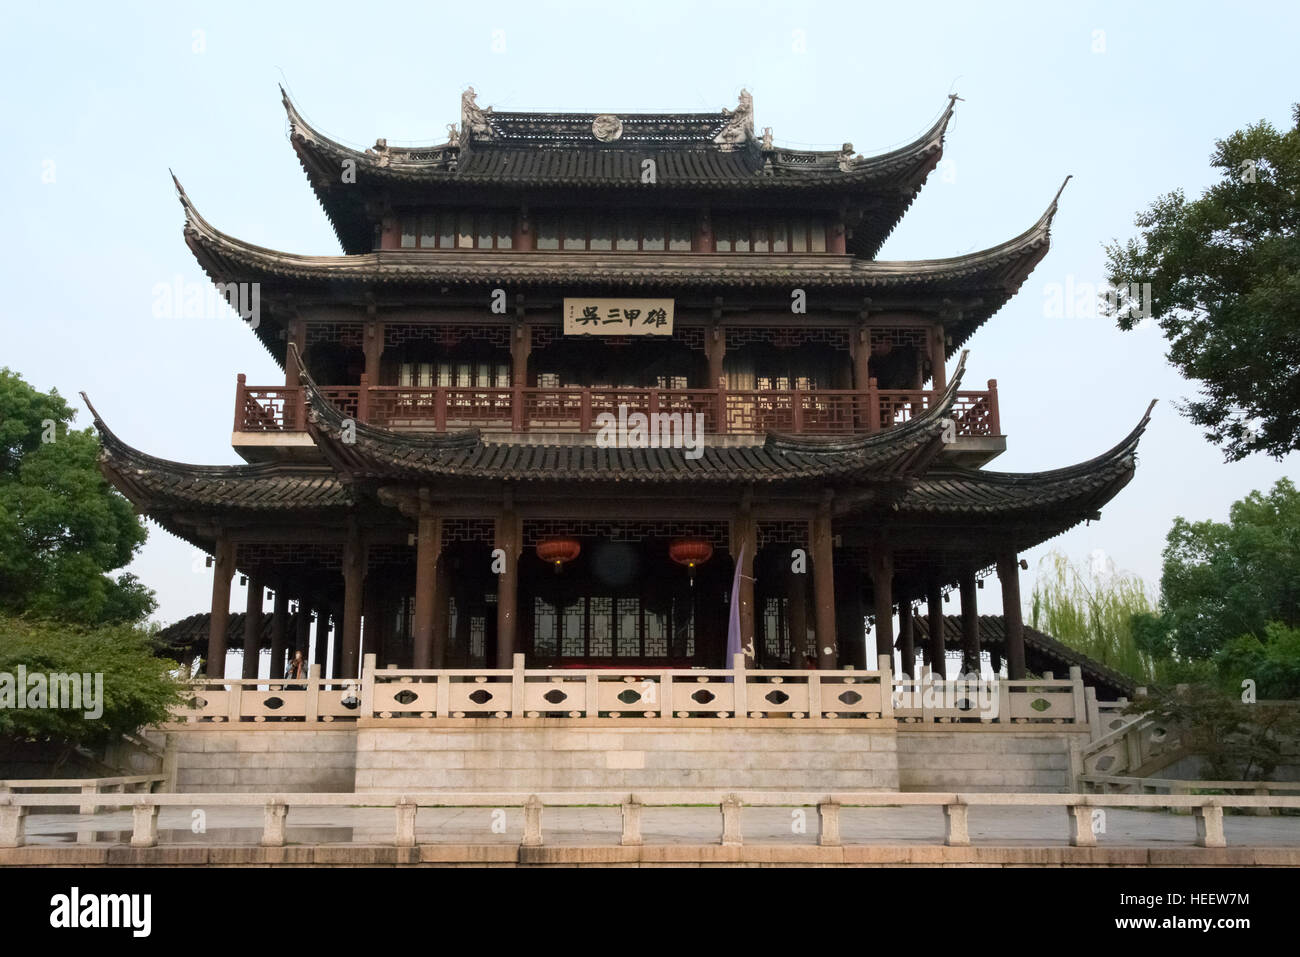 Panmen Torre di Porta, Suzhou, provincia dello Jiangsu, Cina Foto Stock